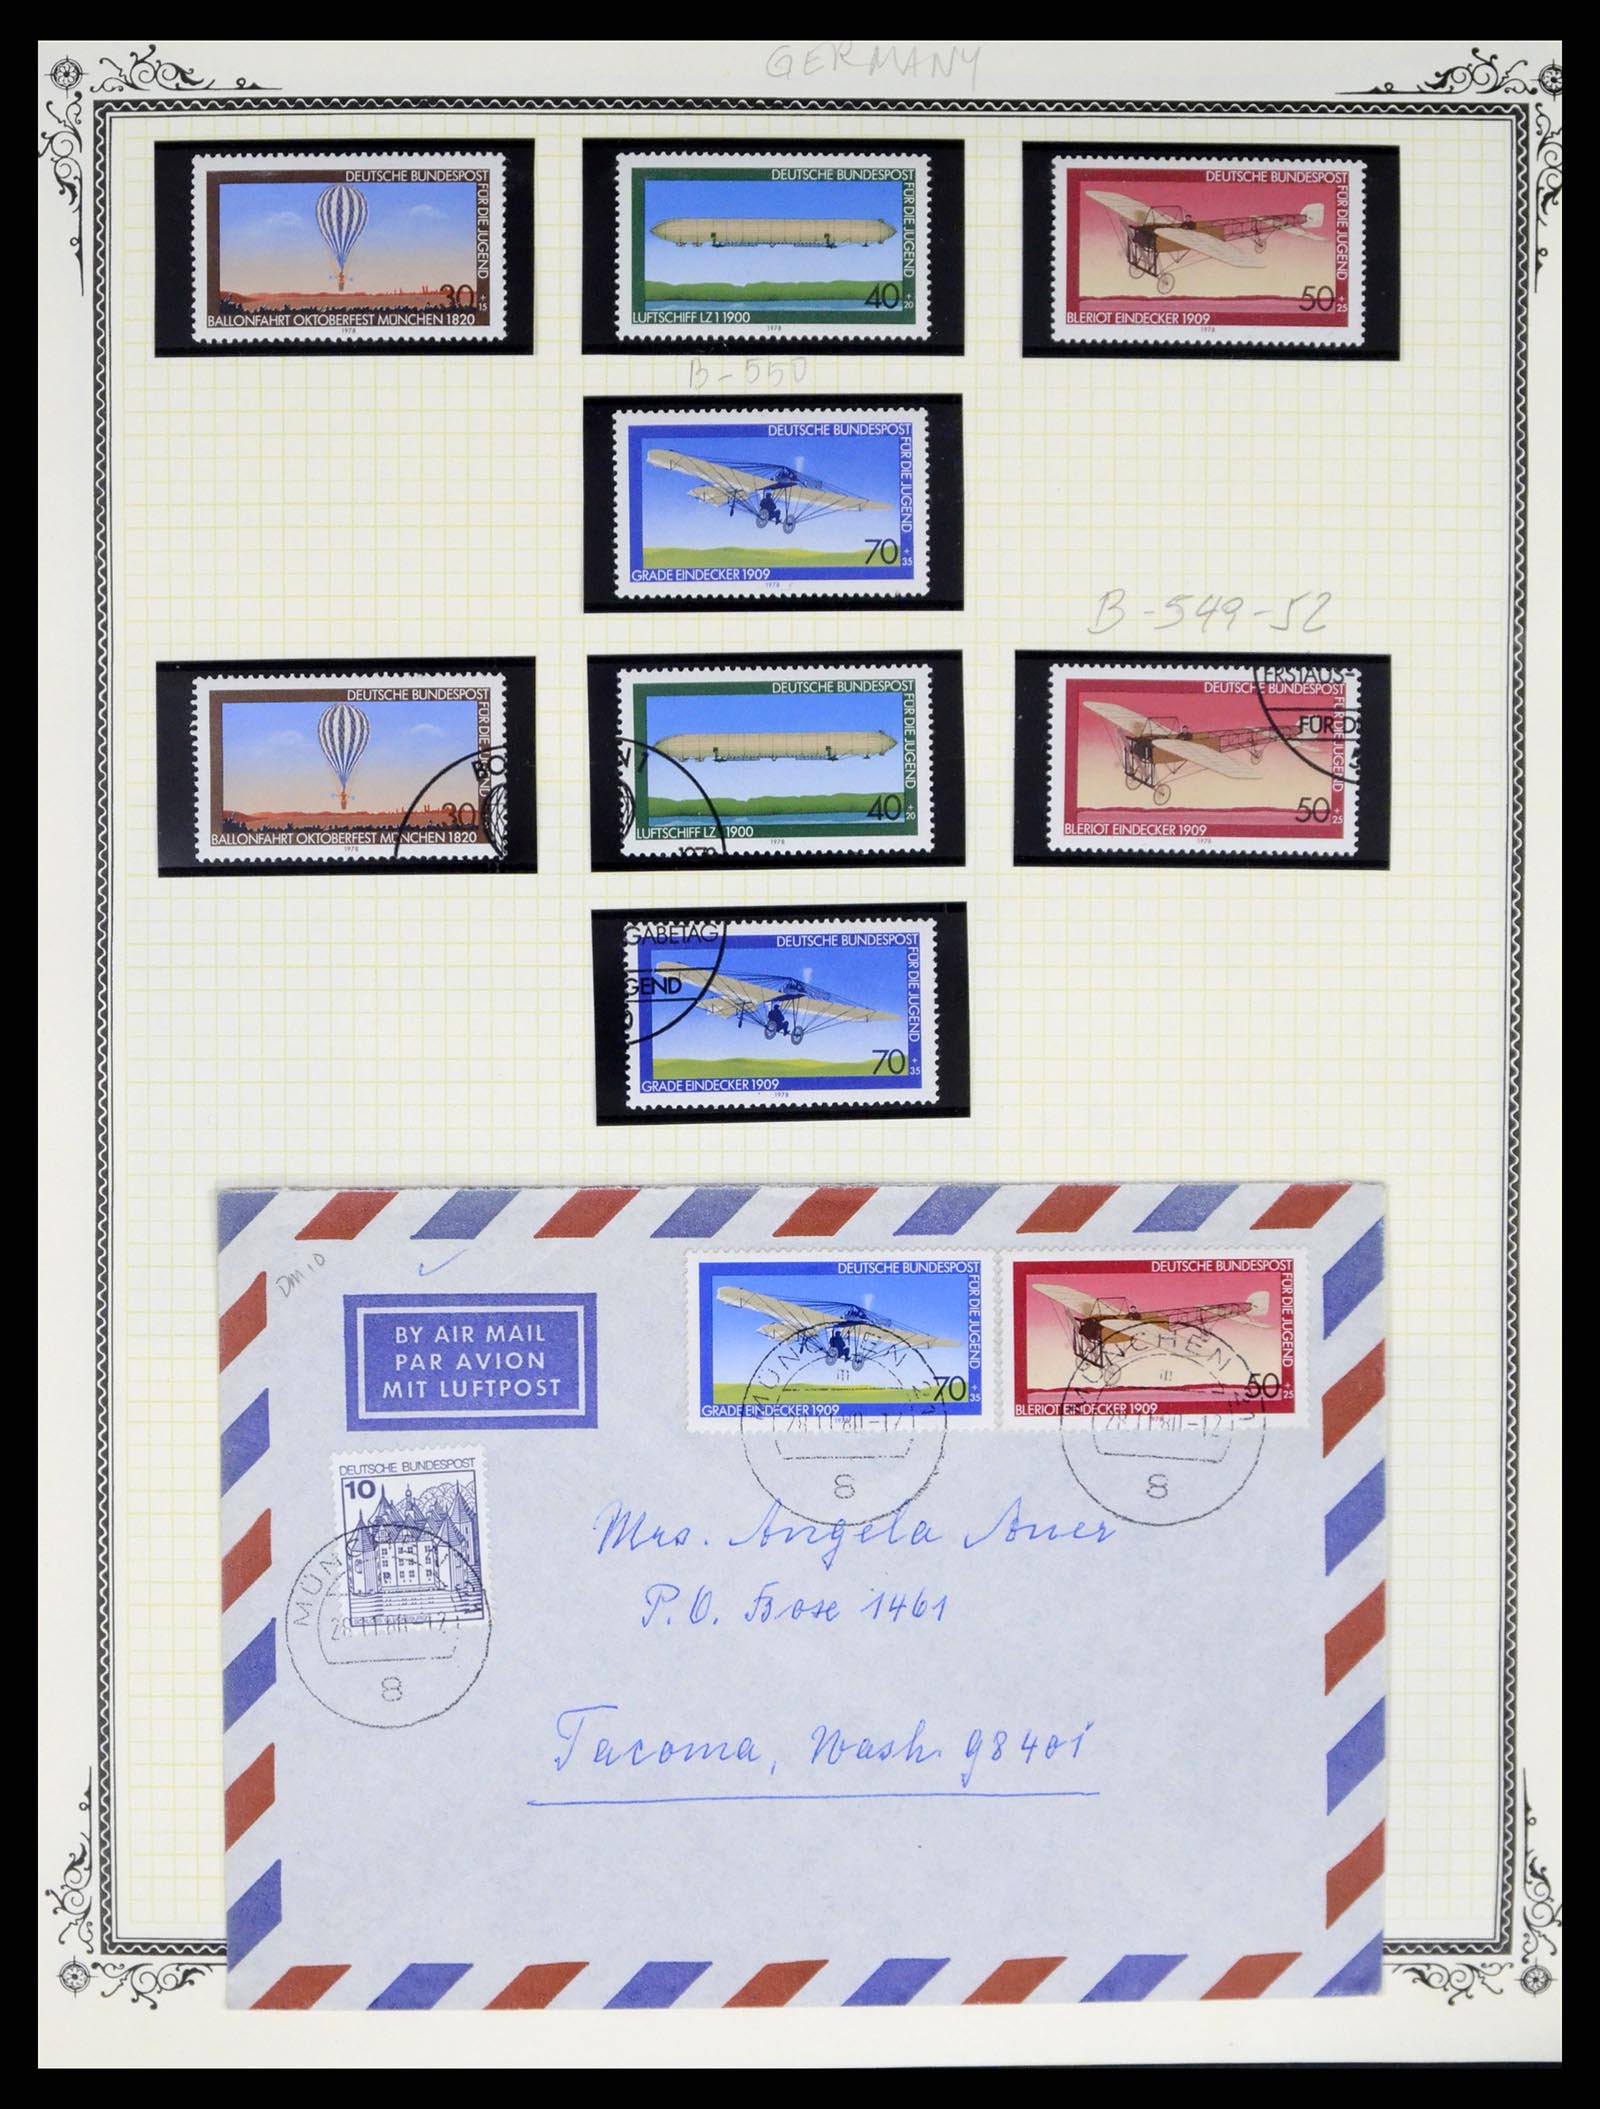 37728 109 - Postzegelverzameling 37728 Motief luchtpost 1930-2000.